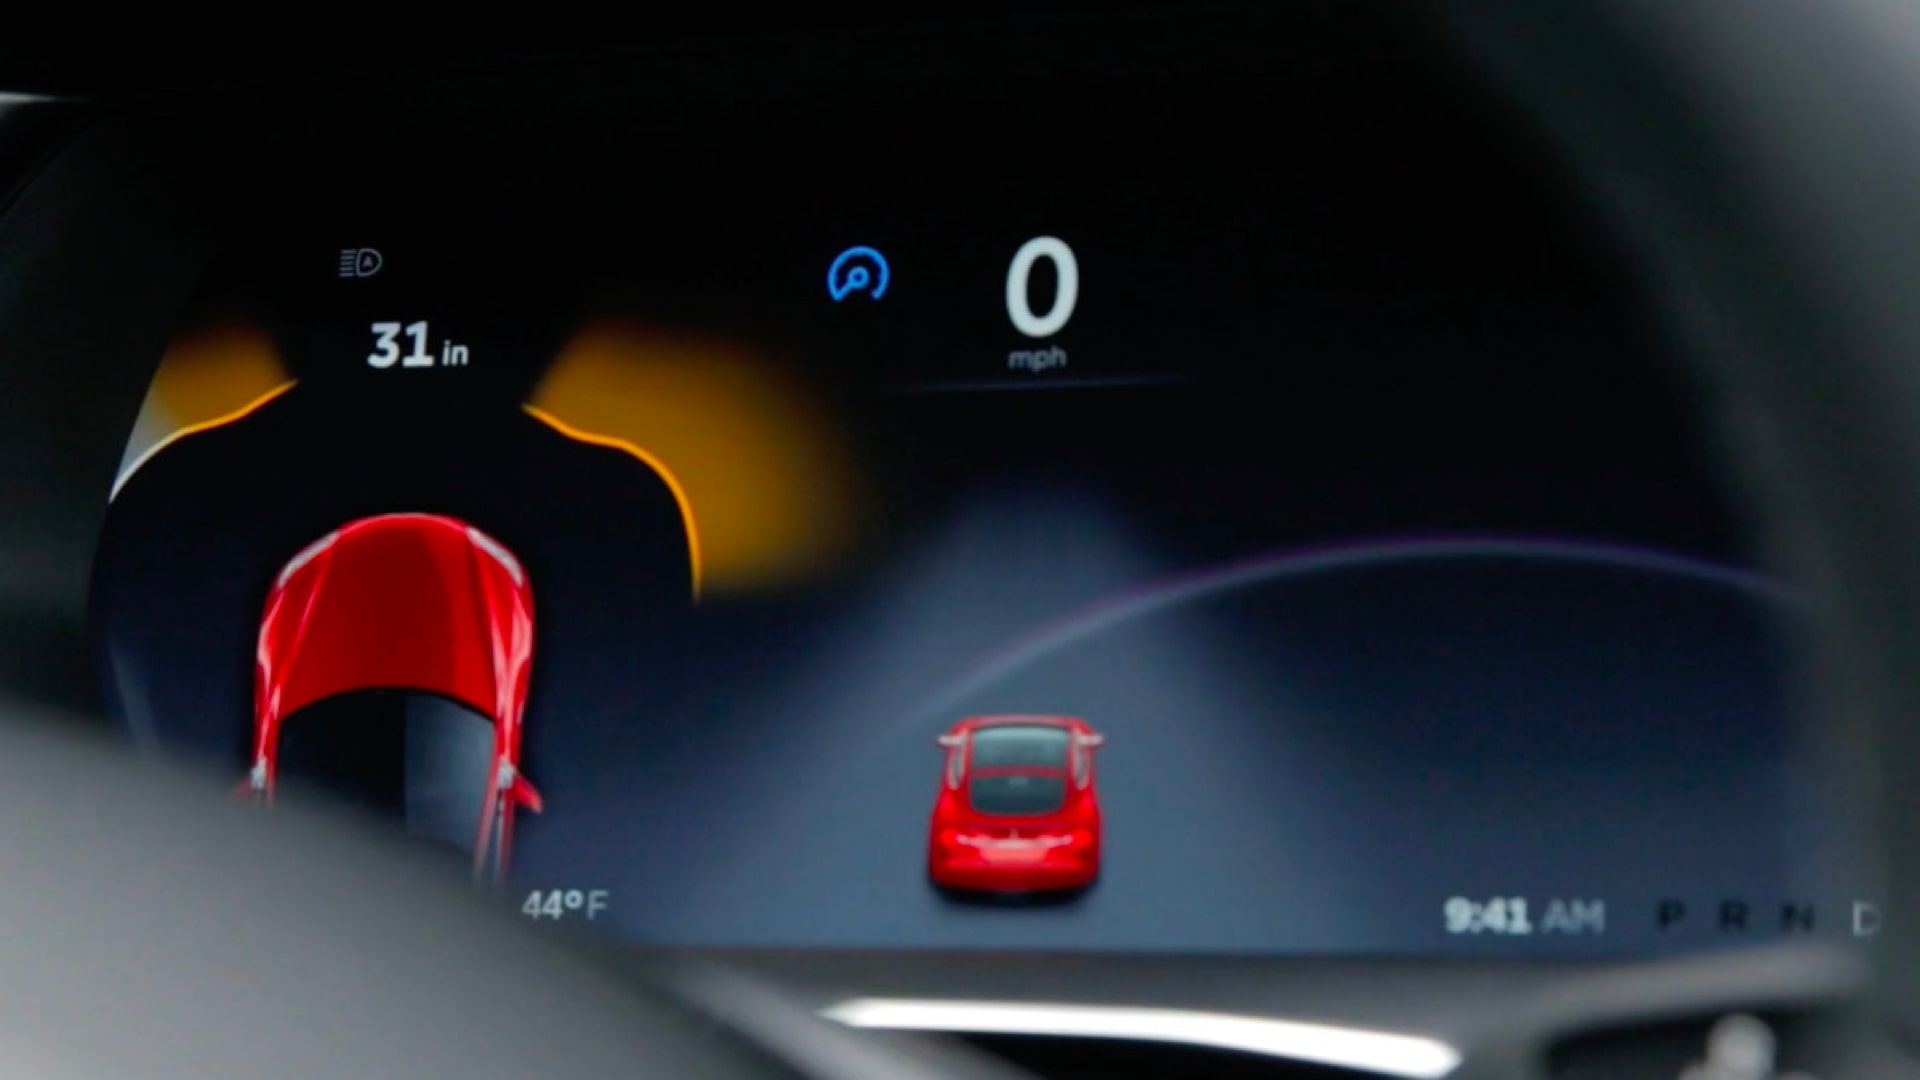 Tesla Model S auto pilot interface